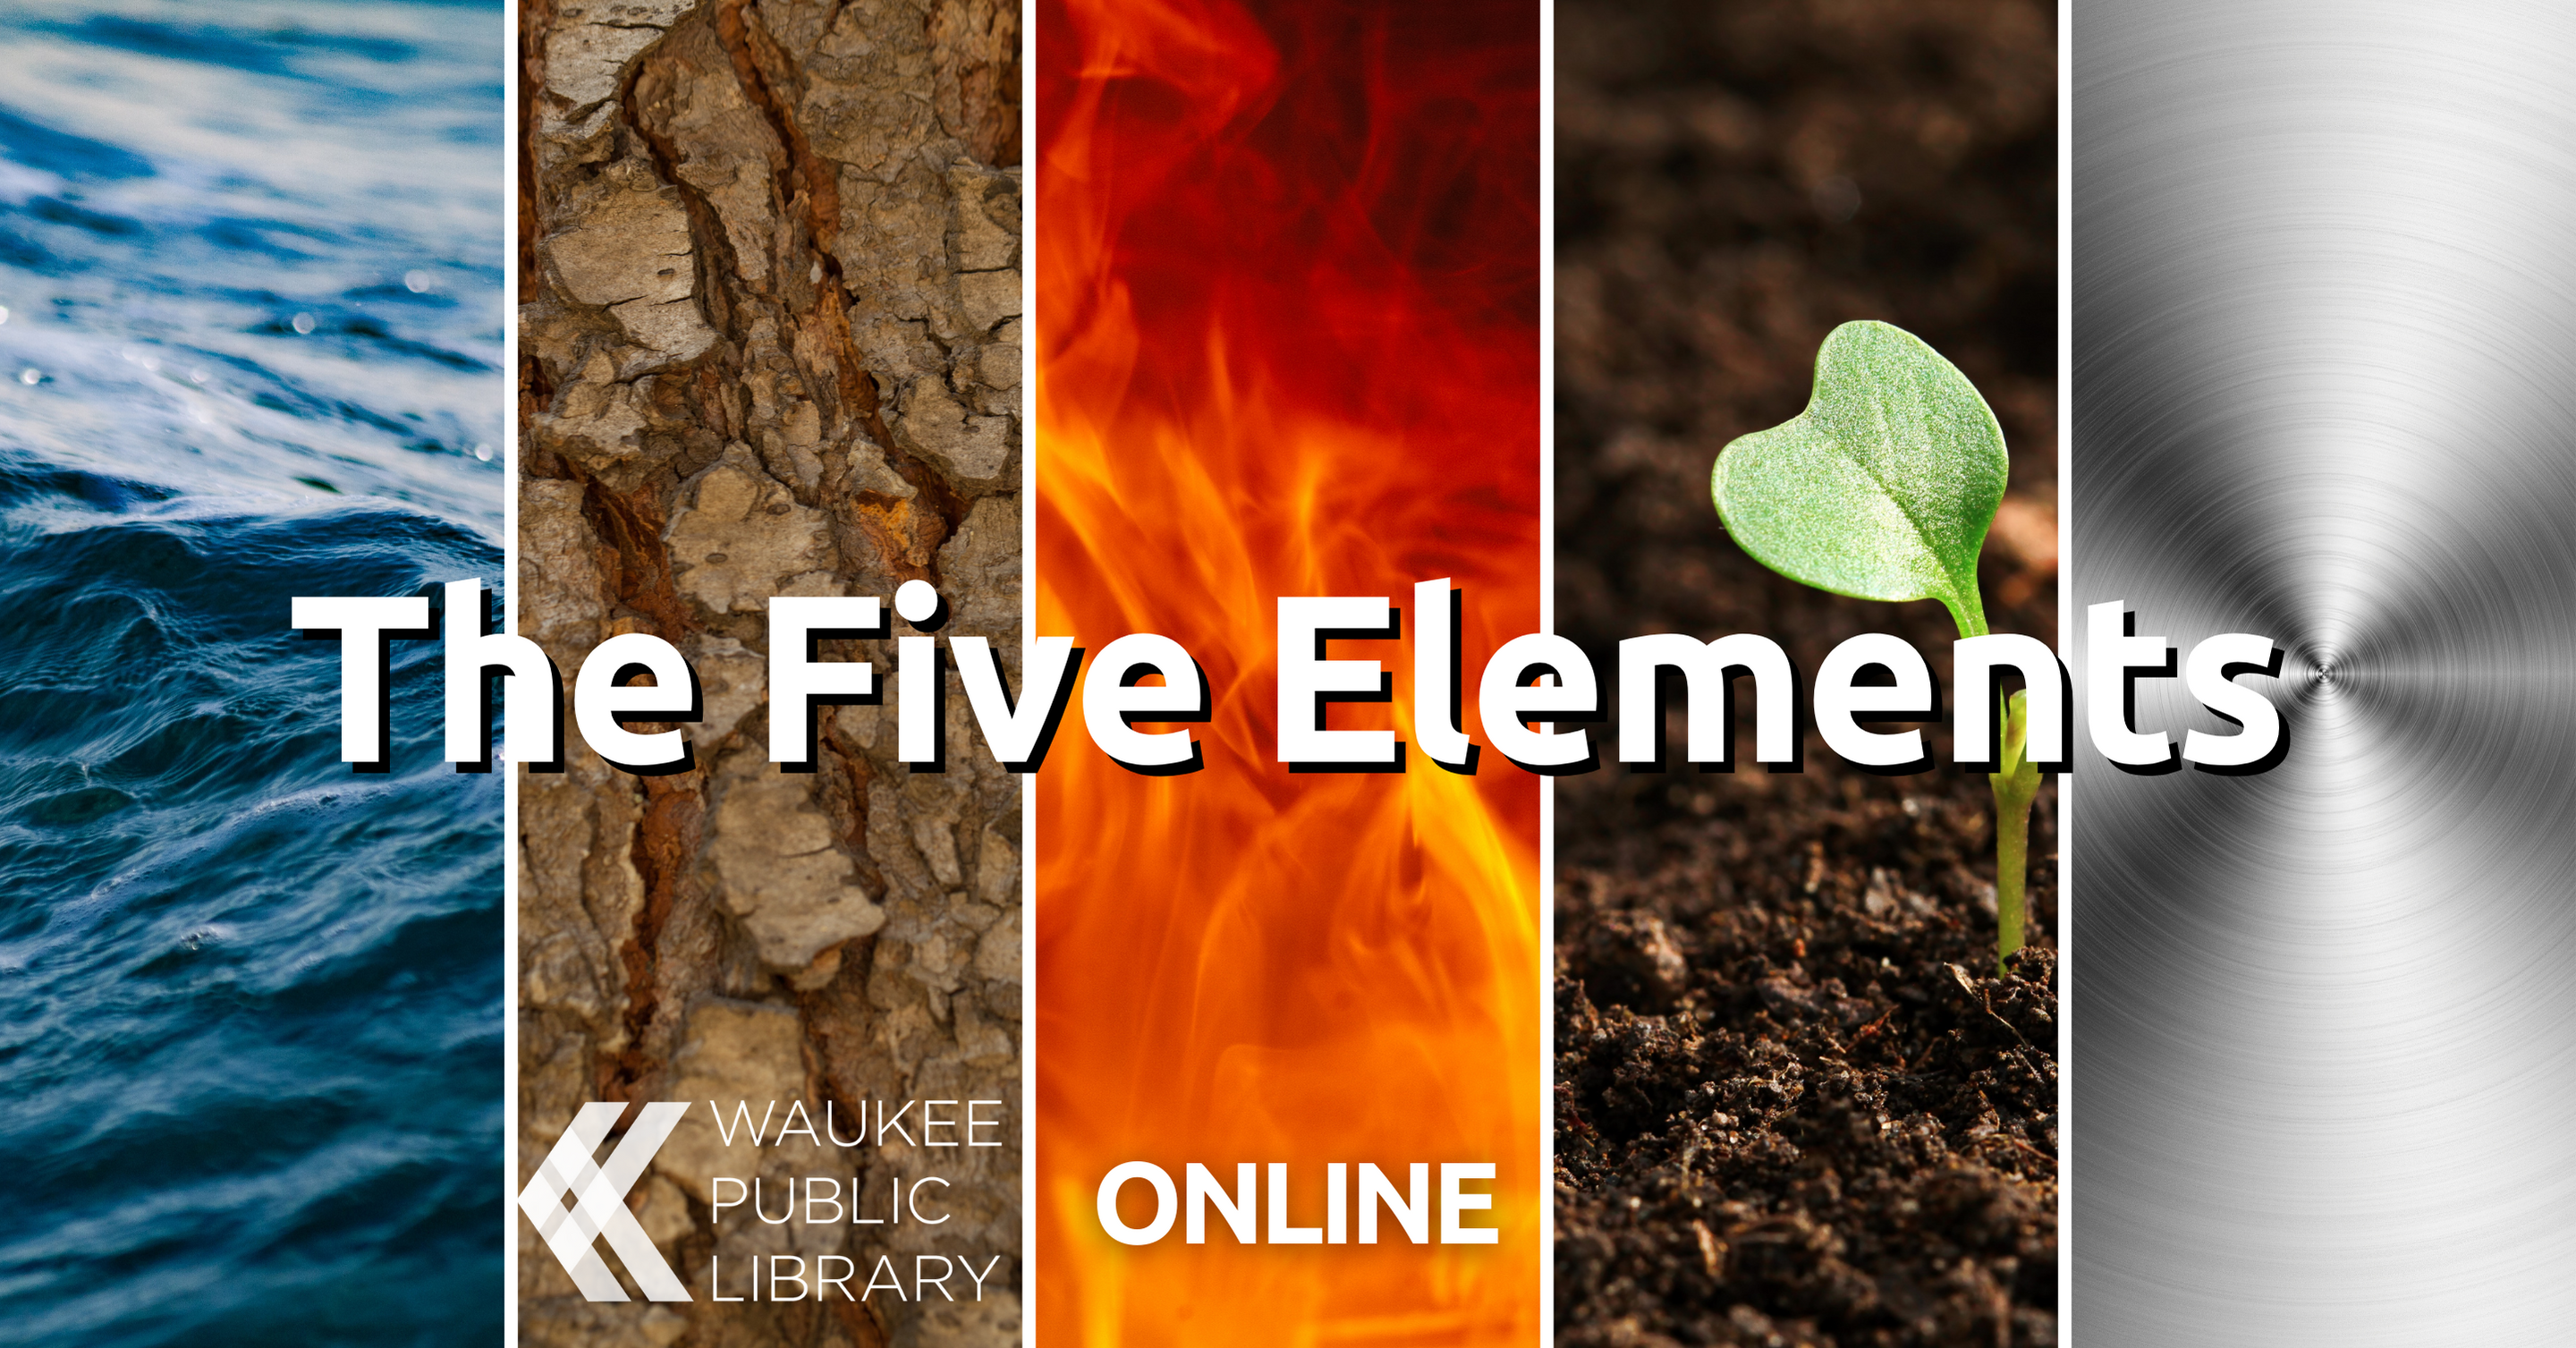 The Five Elements (Online)